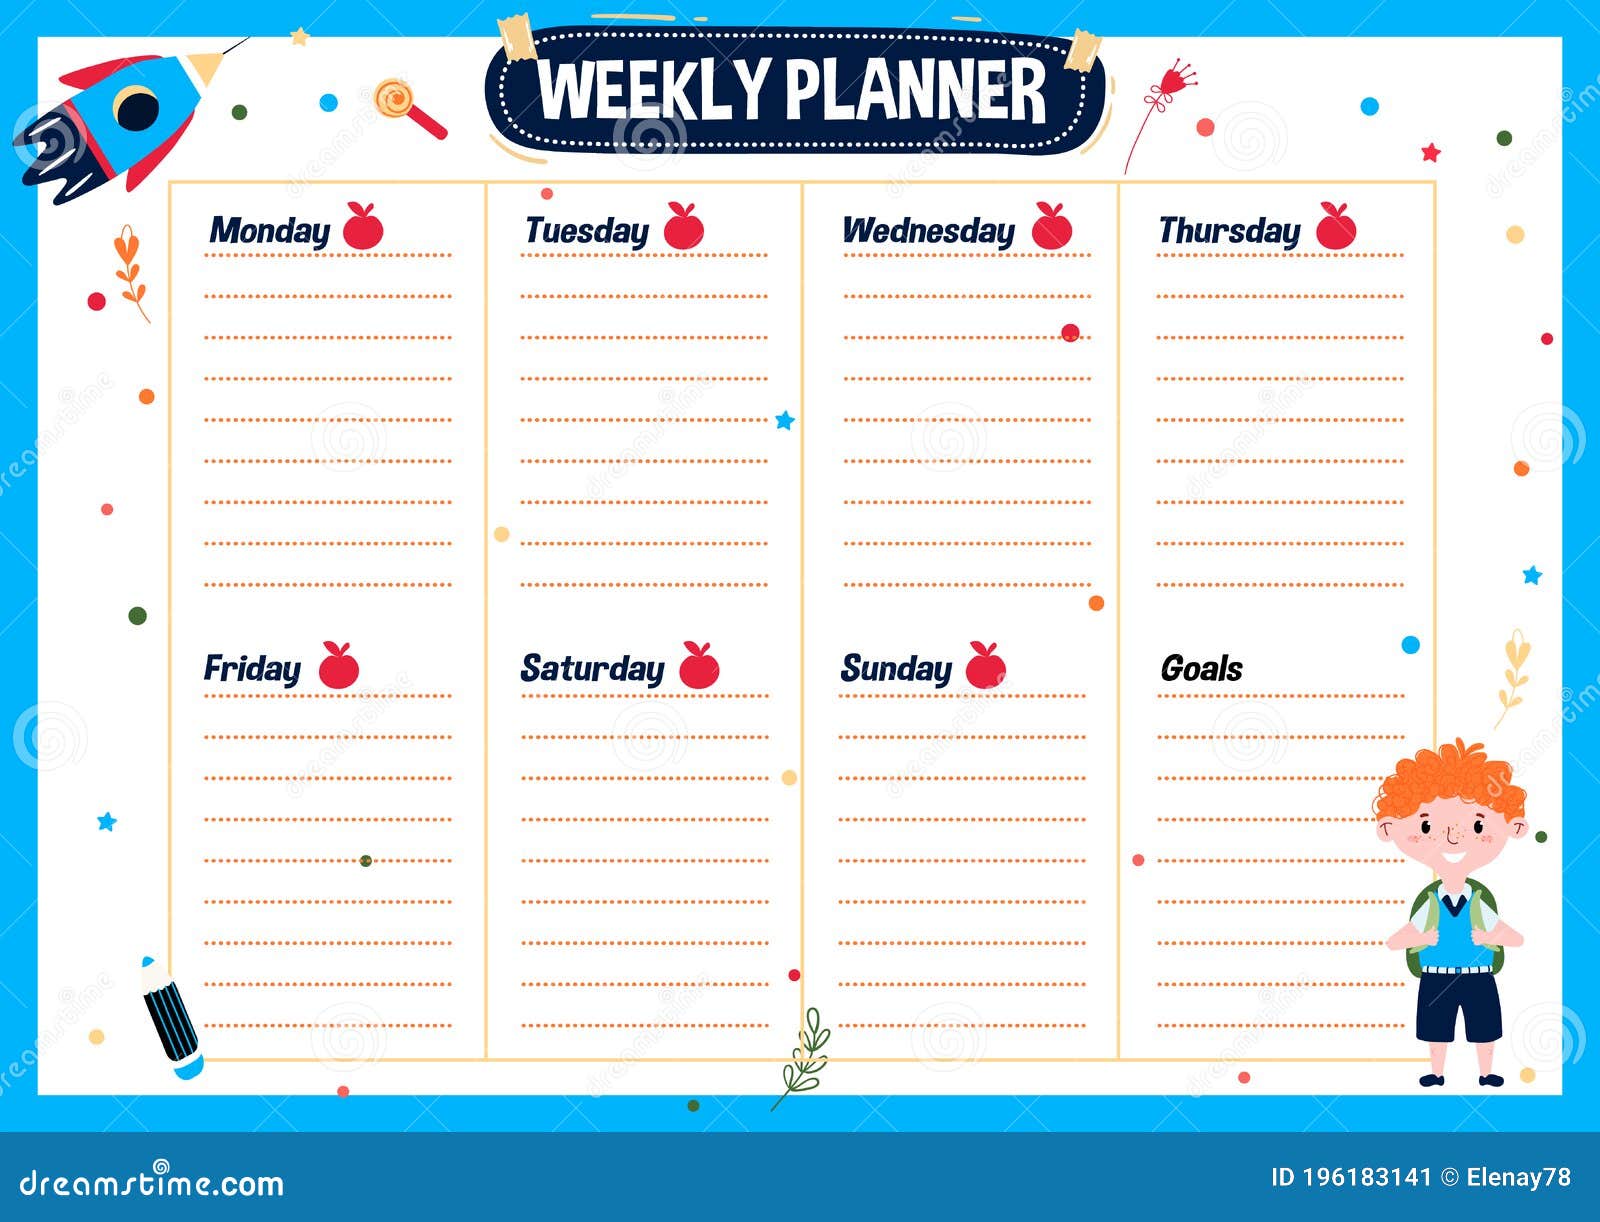 Weekly Organizer Weekly Planner School Planner Printable Planner Weekly Schedule To-Do List